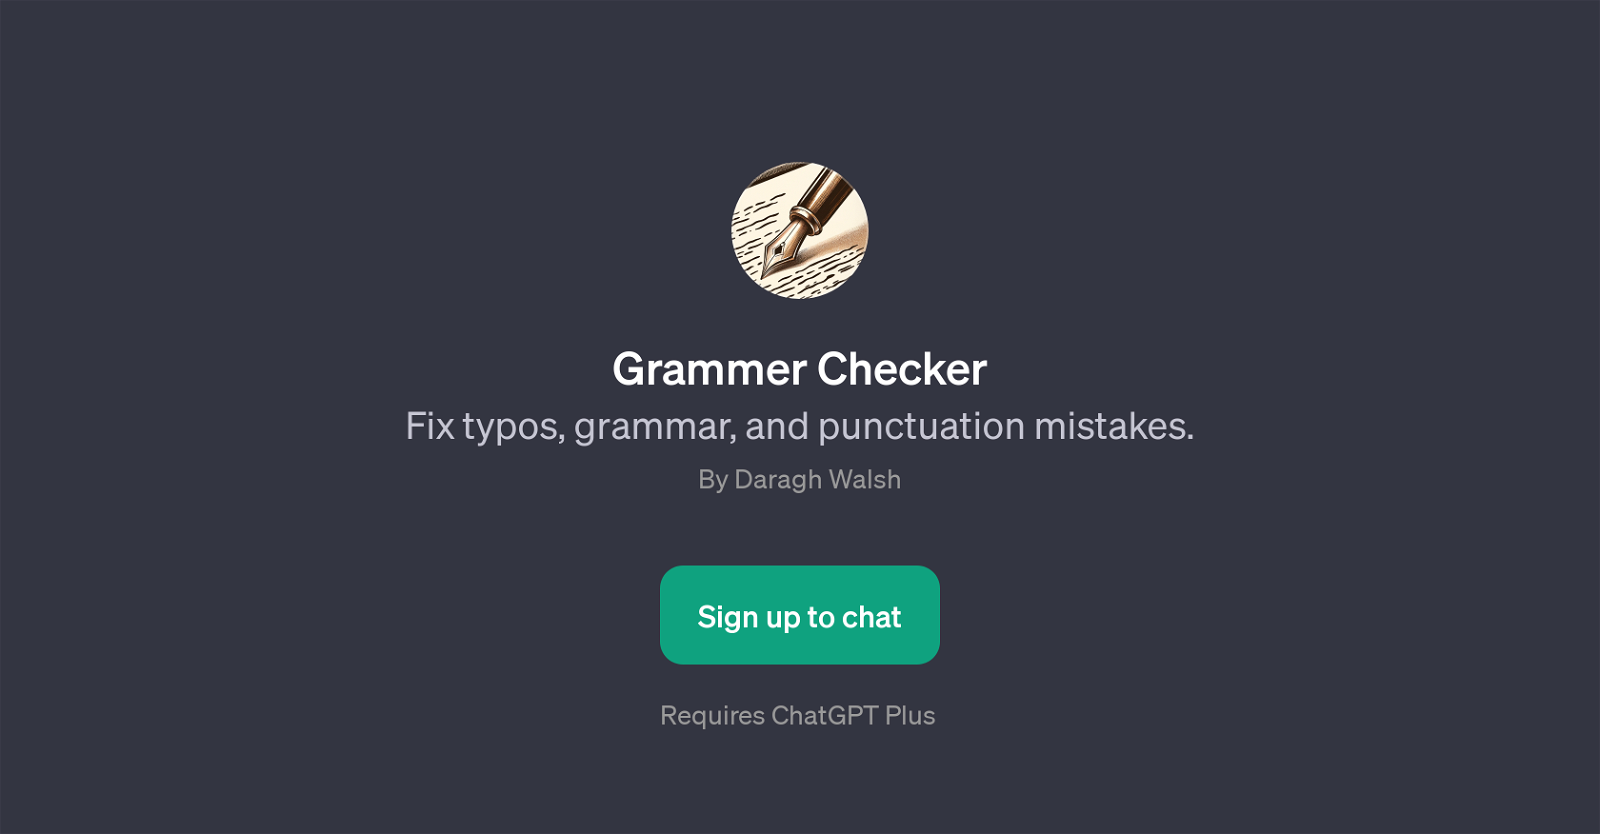 Grammer Checker website